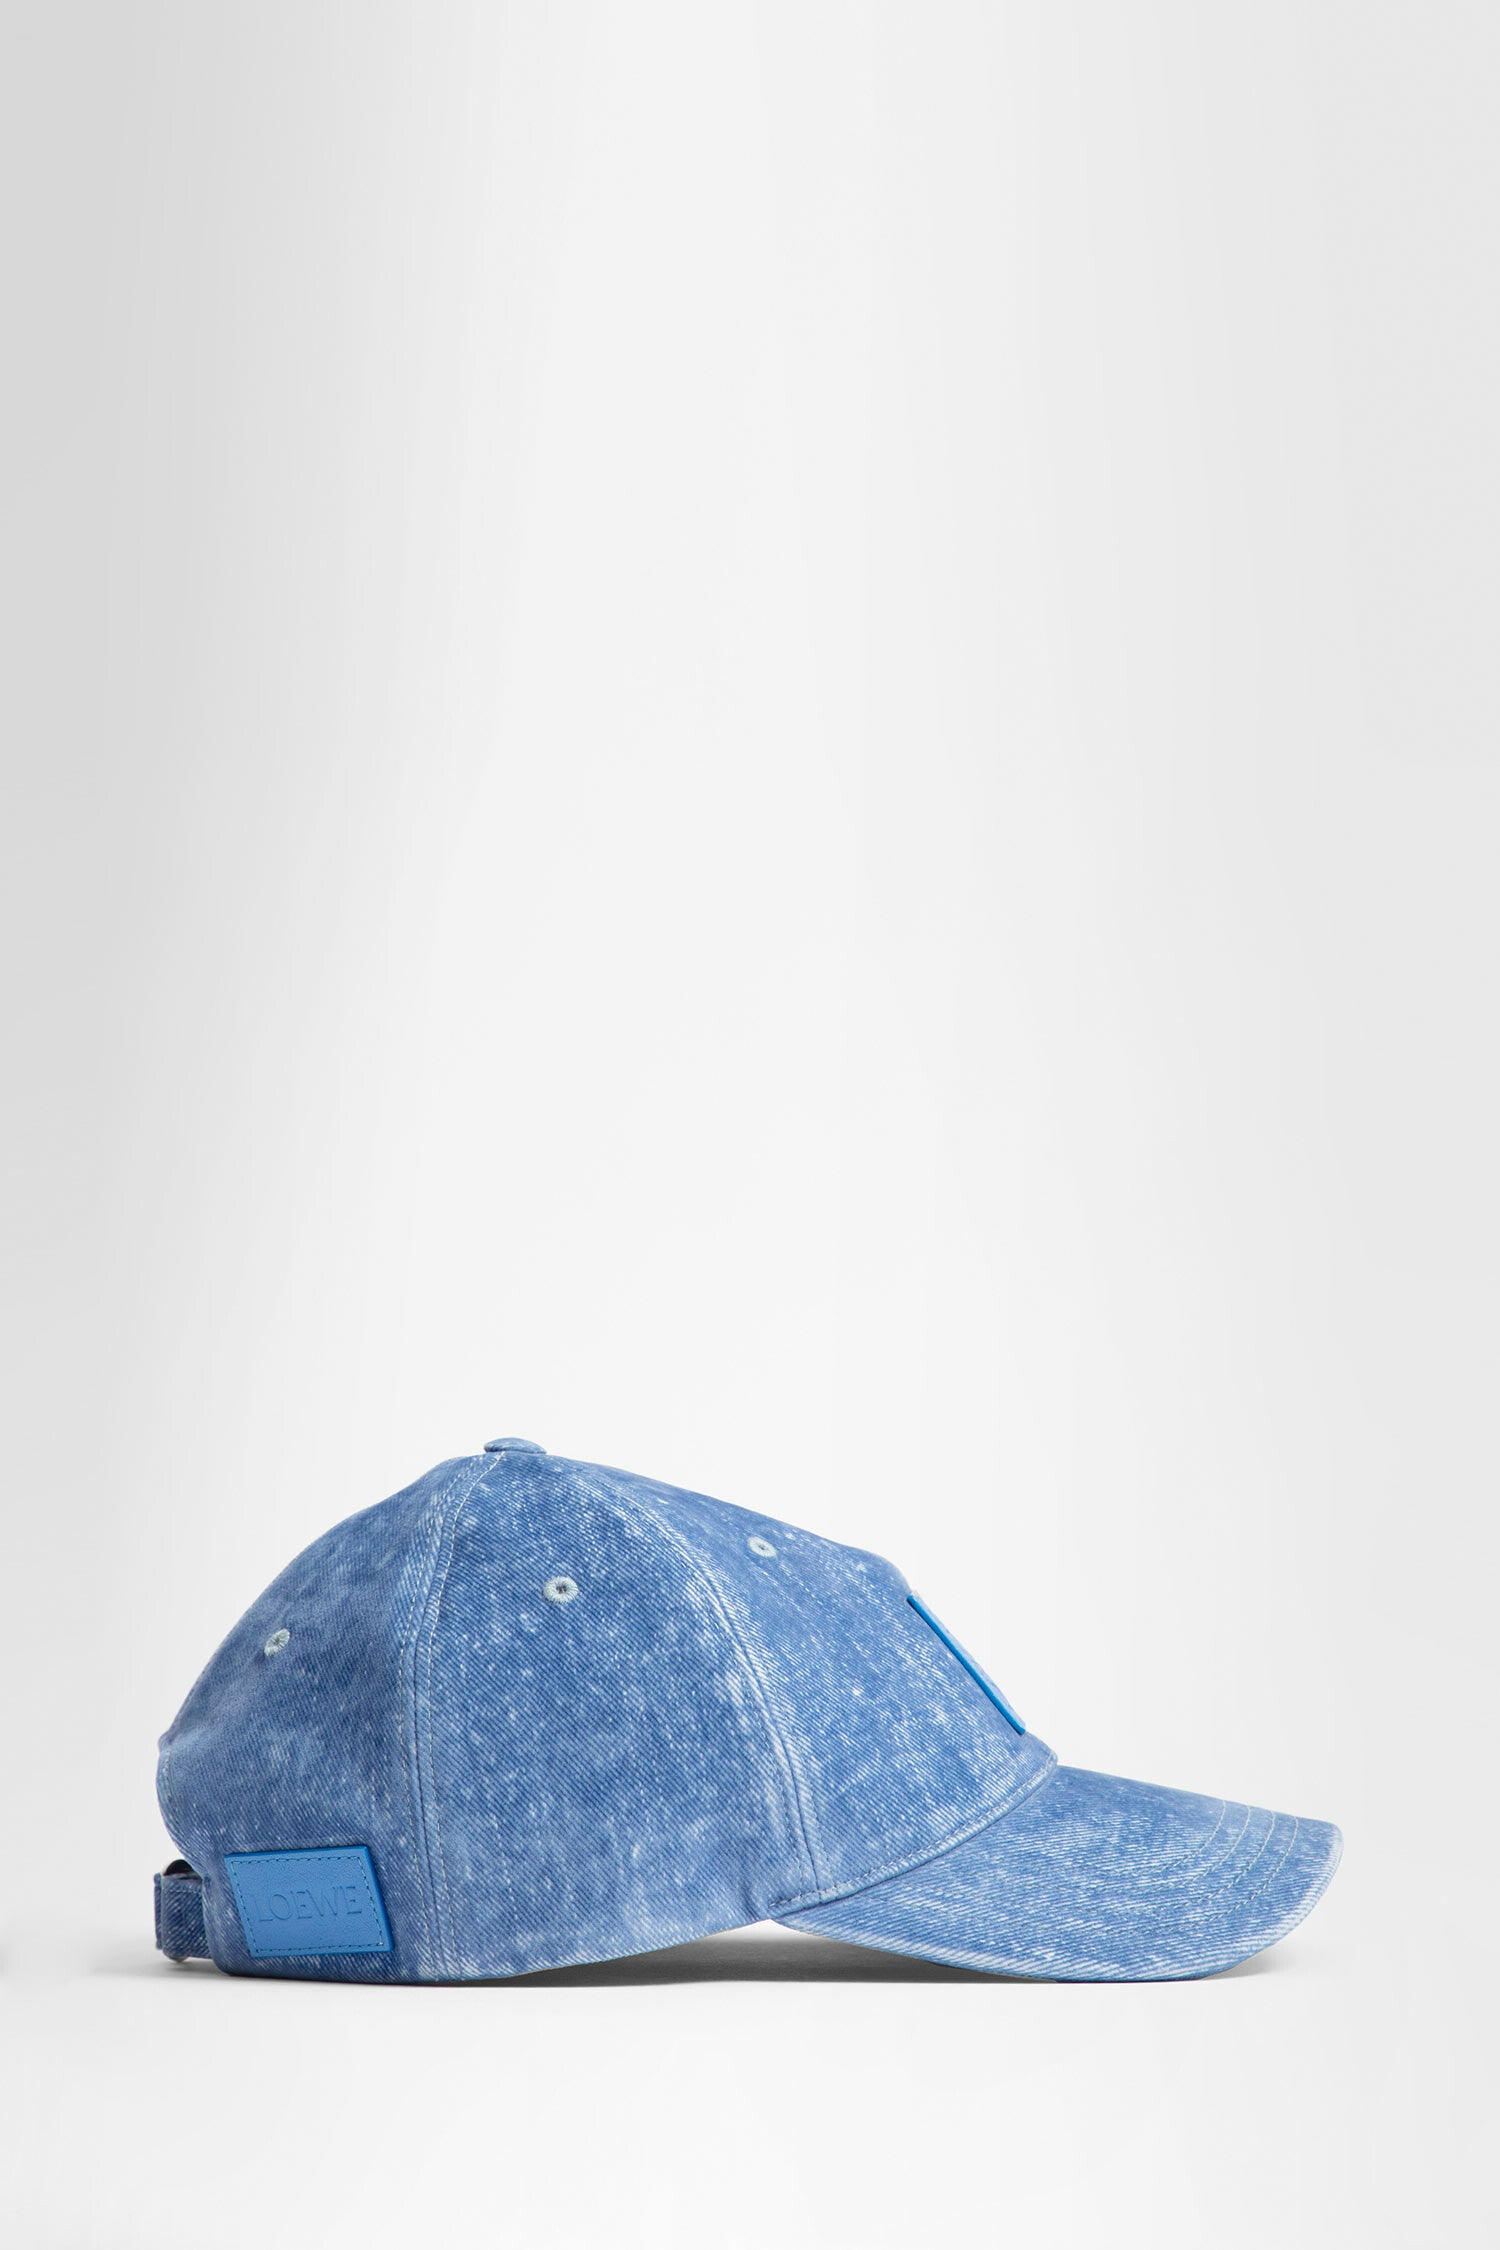 LOEWE UNISEX BLUE HATS